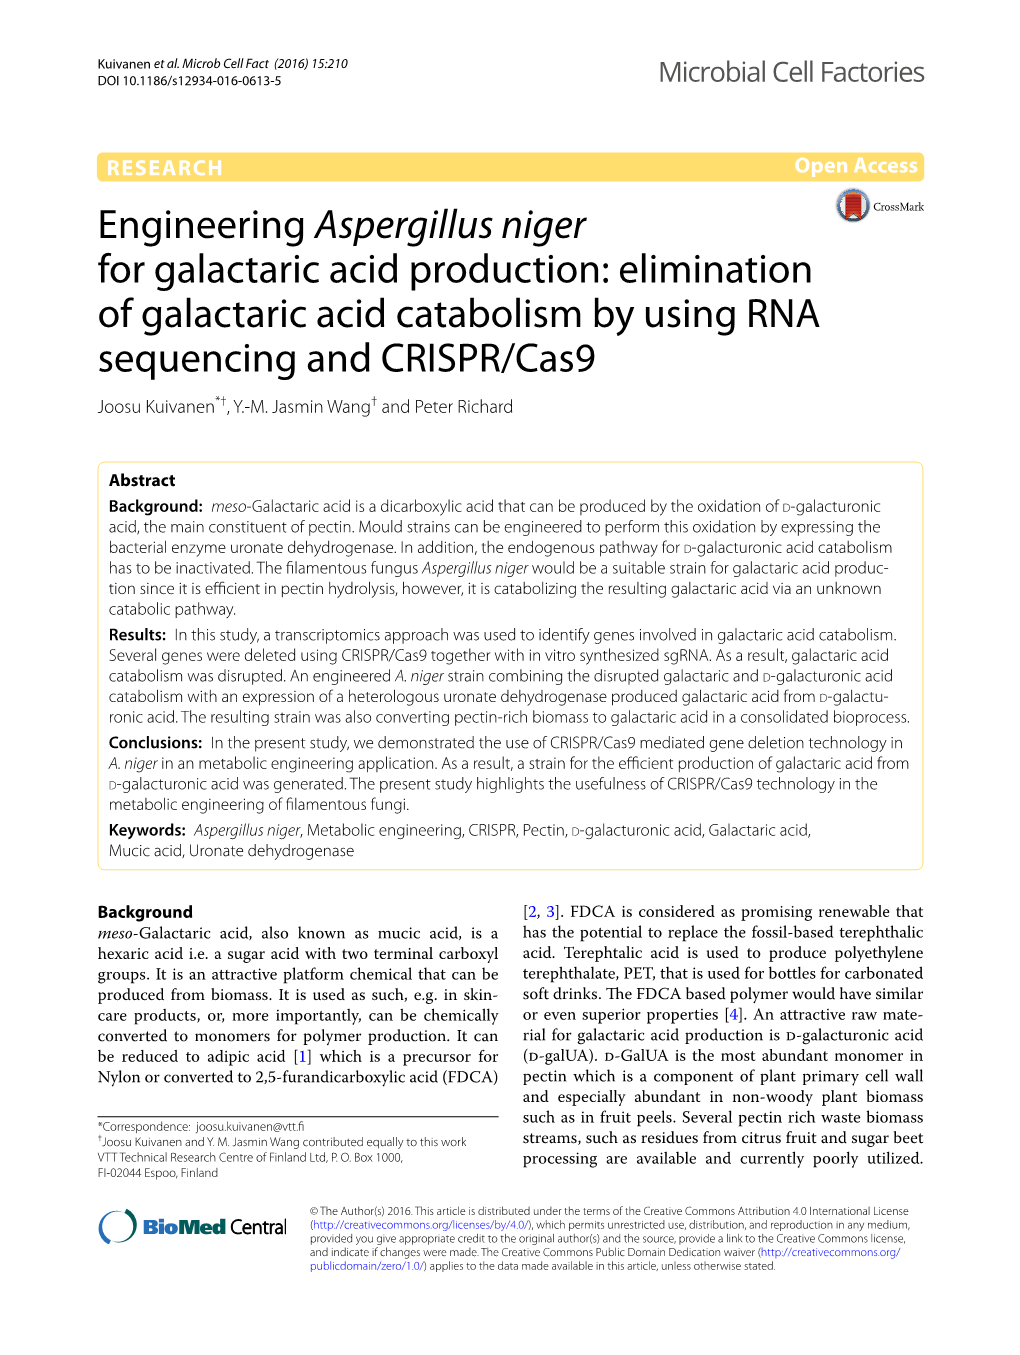 Elimination of Galactaric Acid Catabolism by Using RNA Sequencing and CRISPR/Cas9 Joosu Kuivanen*†, Y.‑M